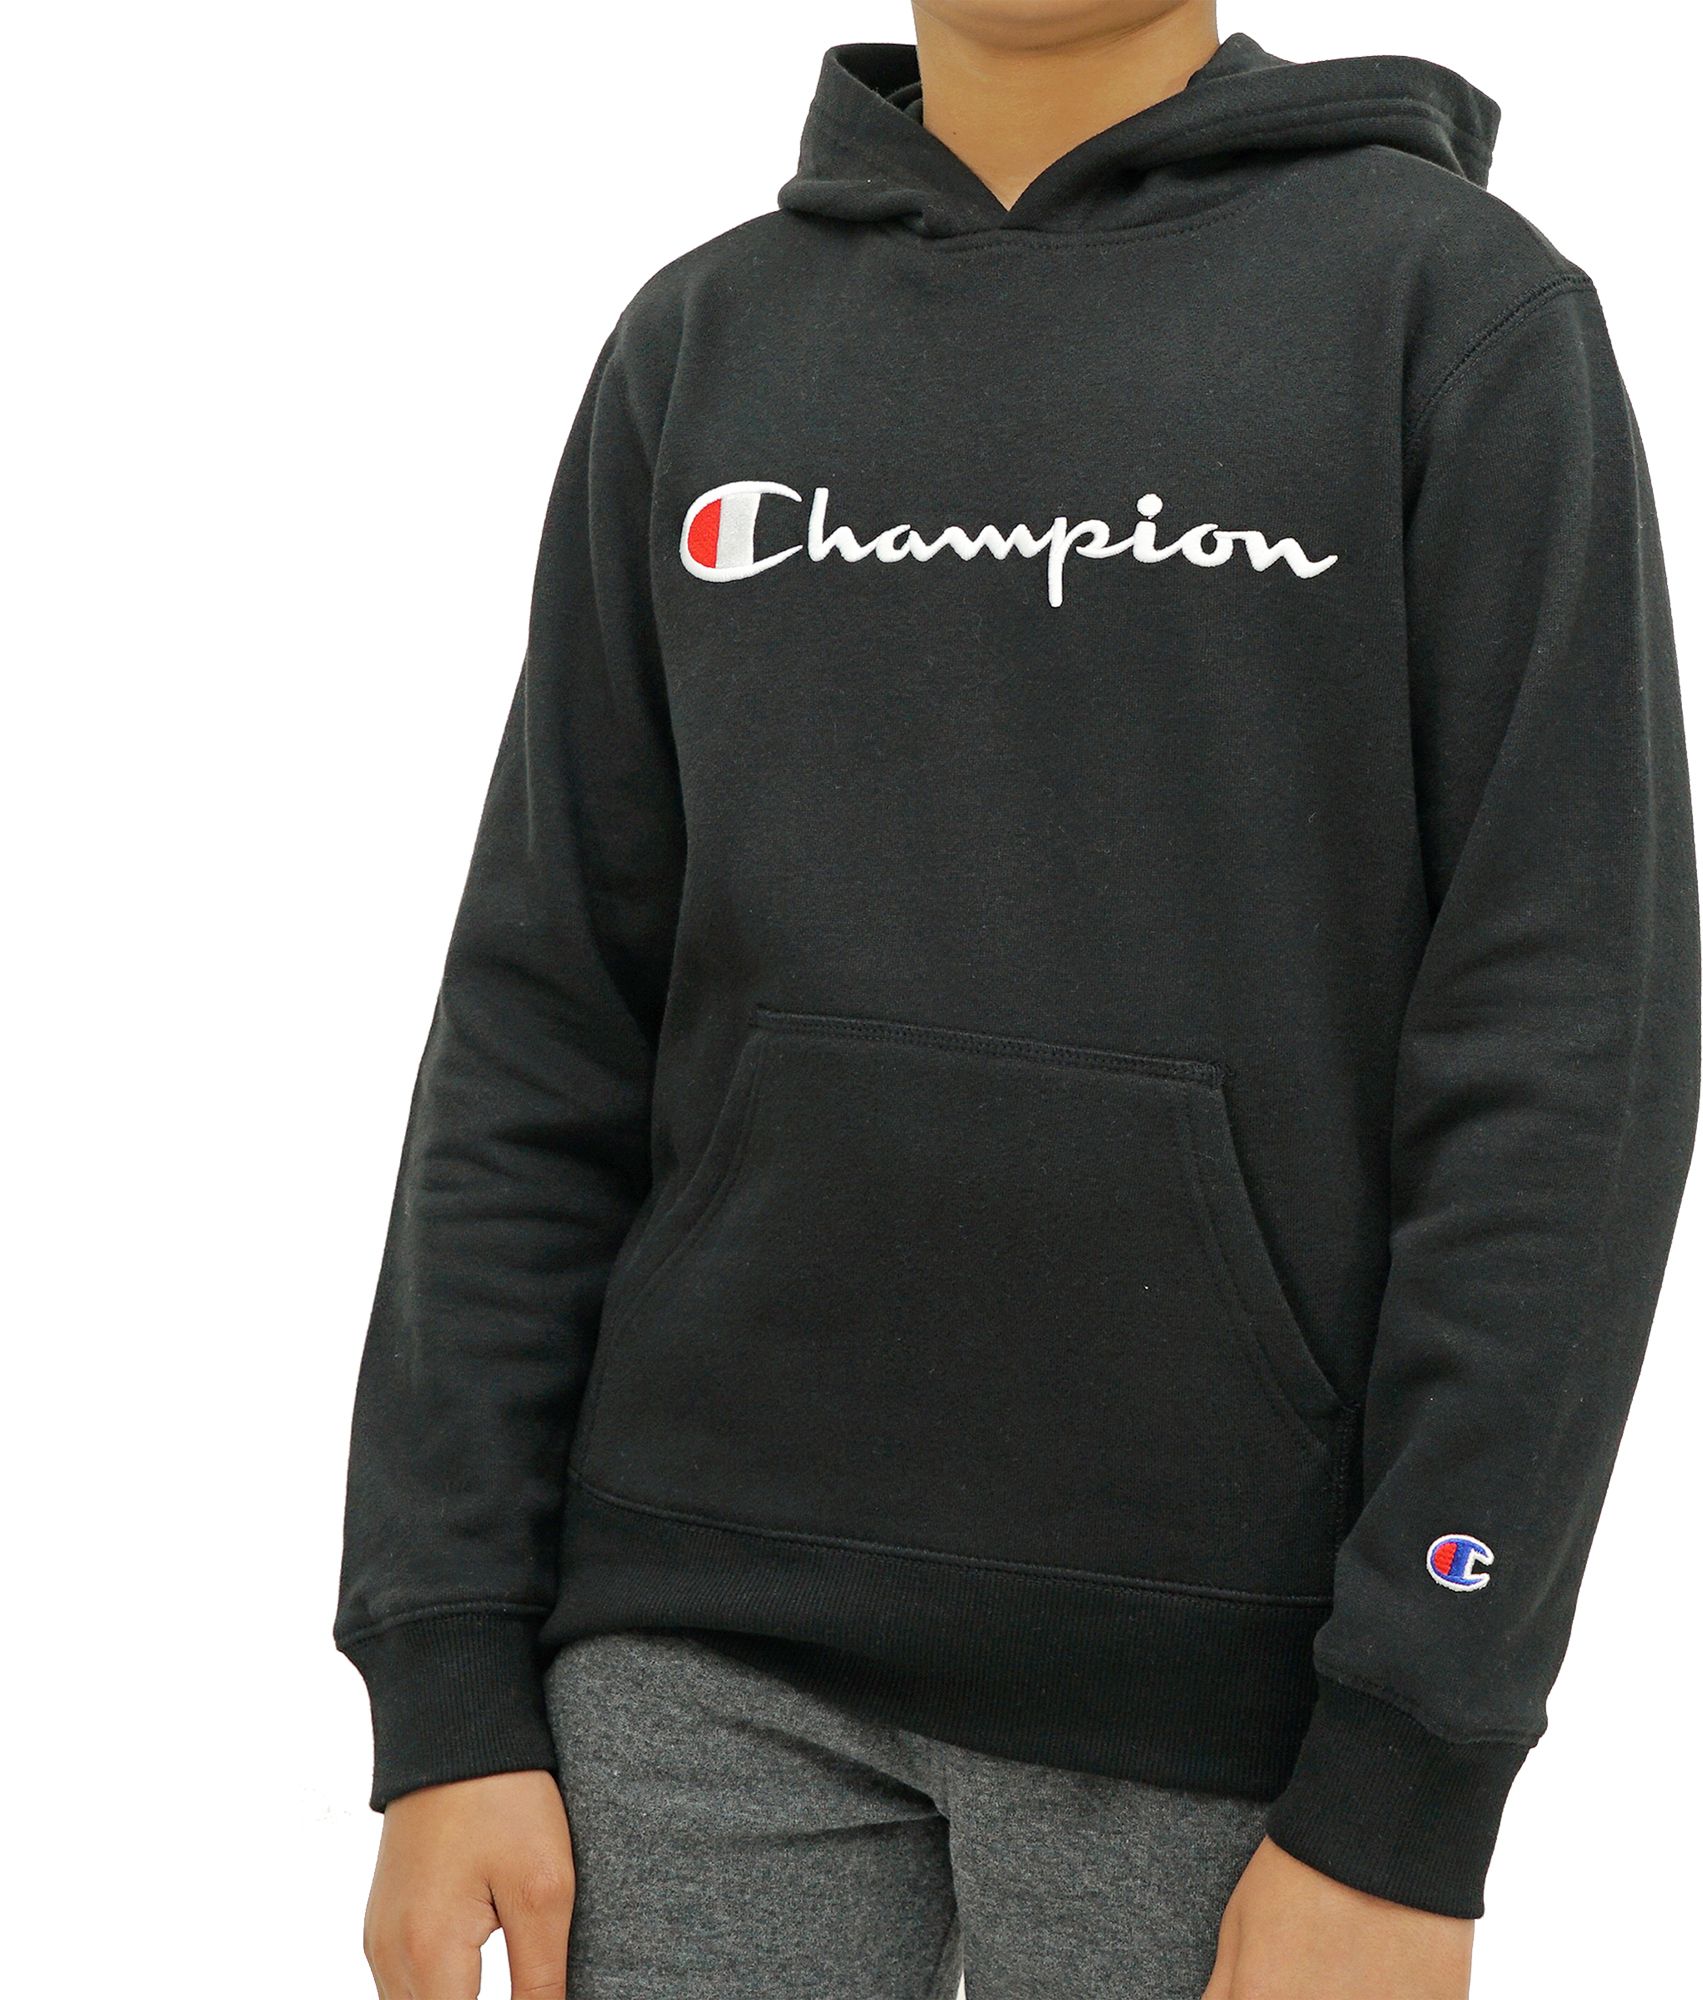 Boys' Champion Clothing | Best Price 